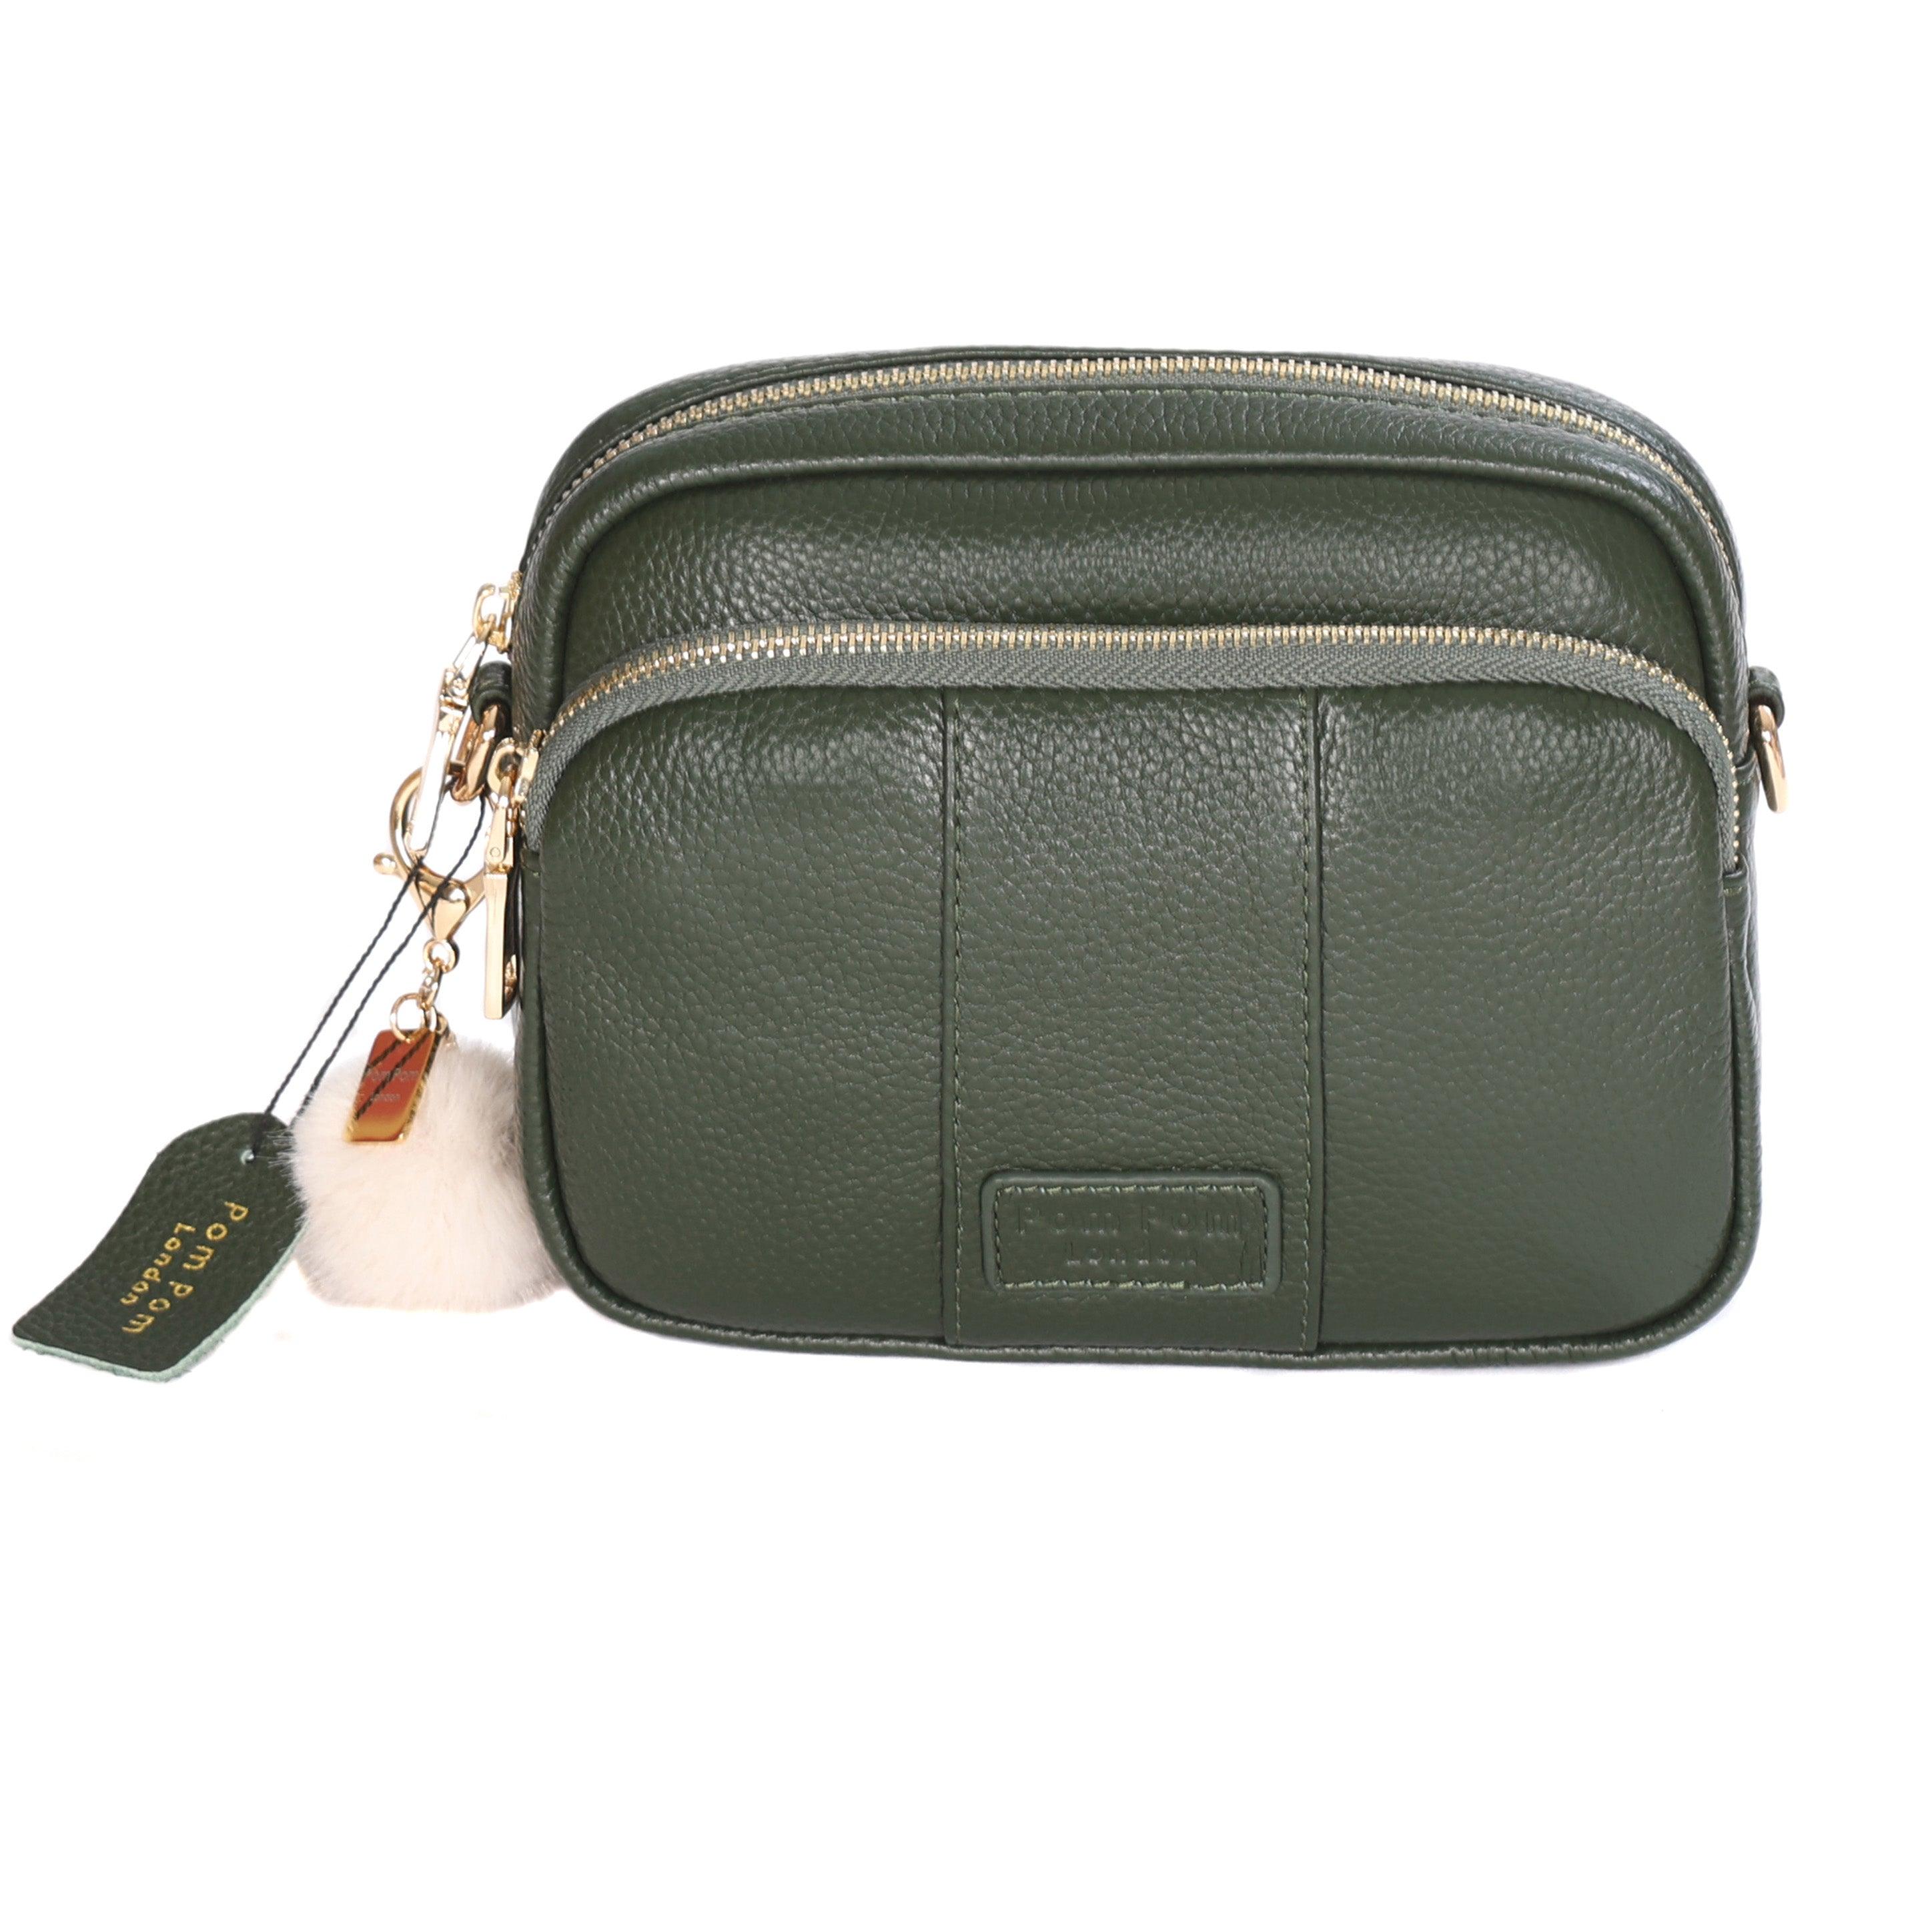 Where can you sell designer handbags? - Quora